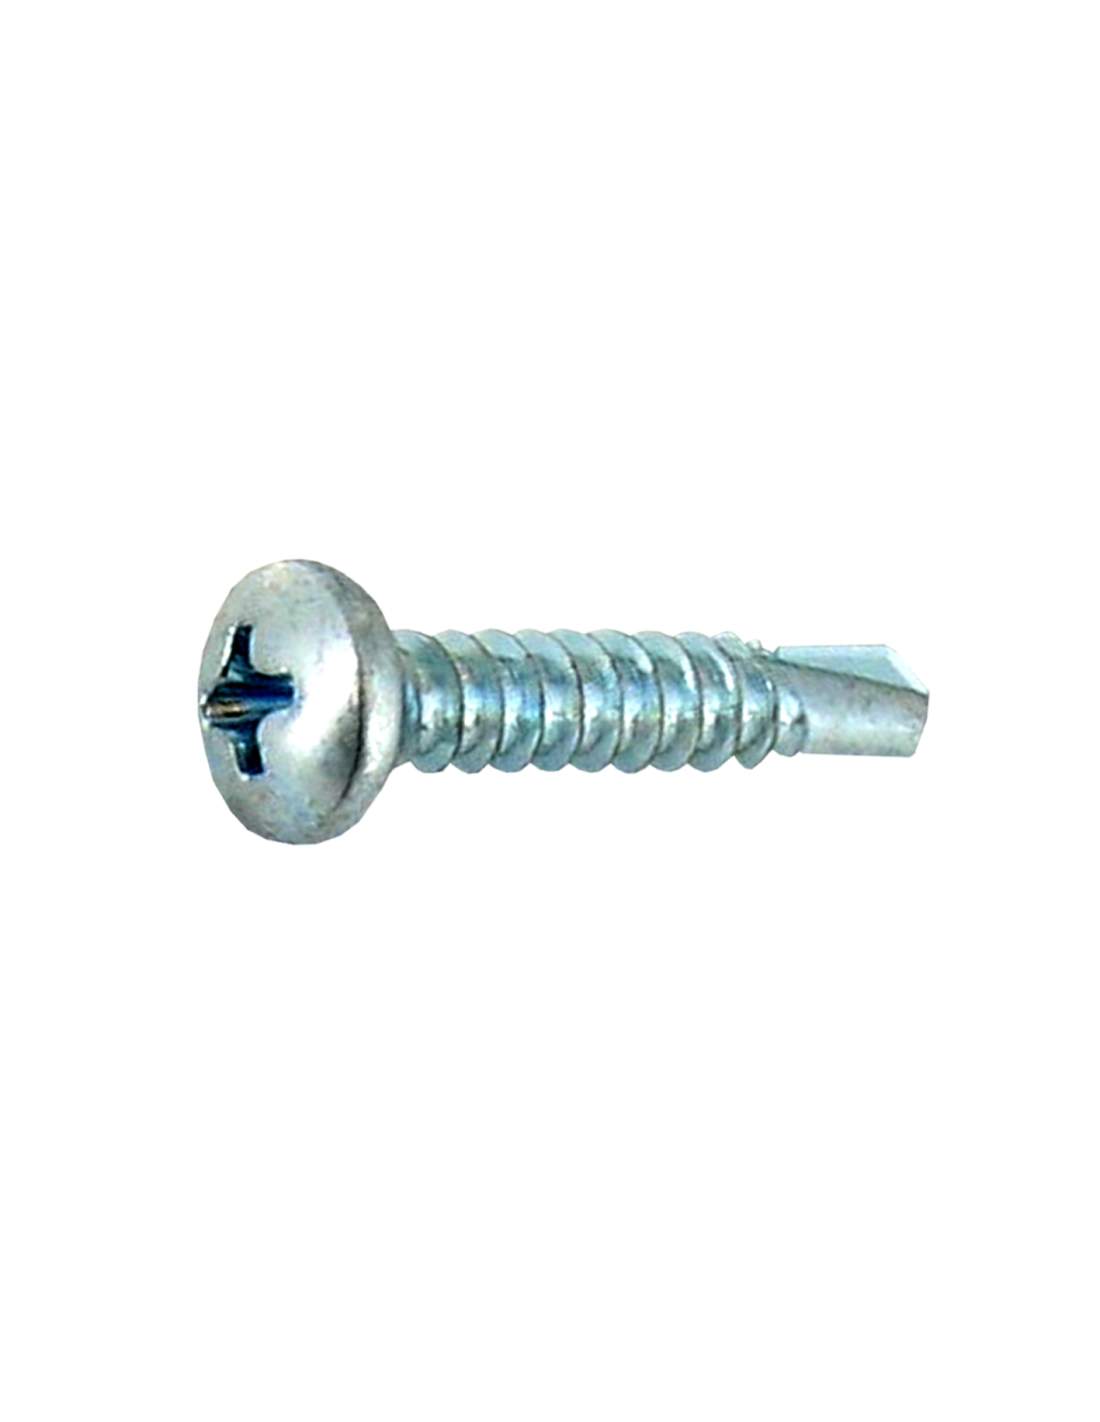 AZI 3.9x16 pan head self-drilling sheet metal screws, 26 pcs.